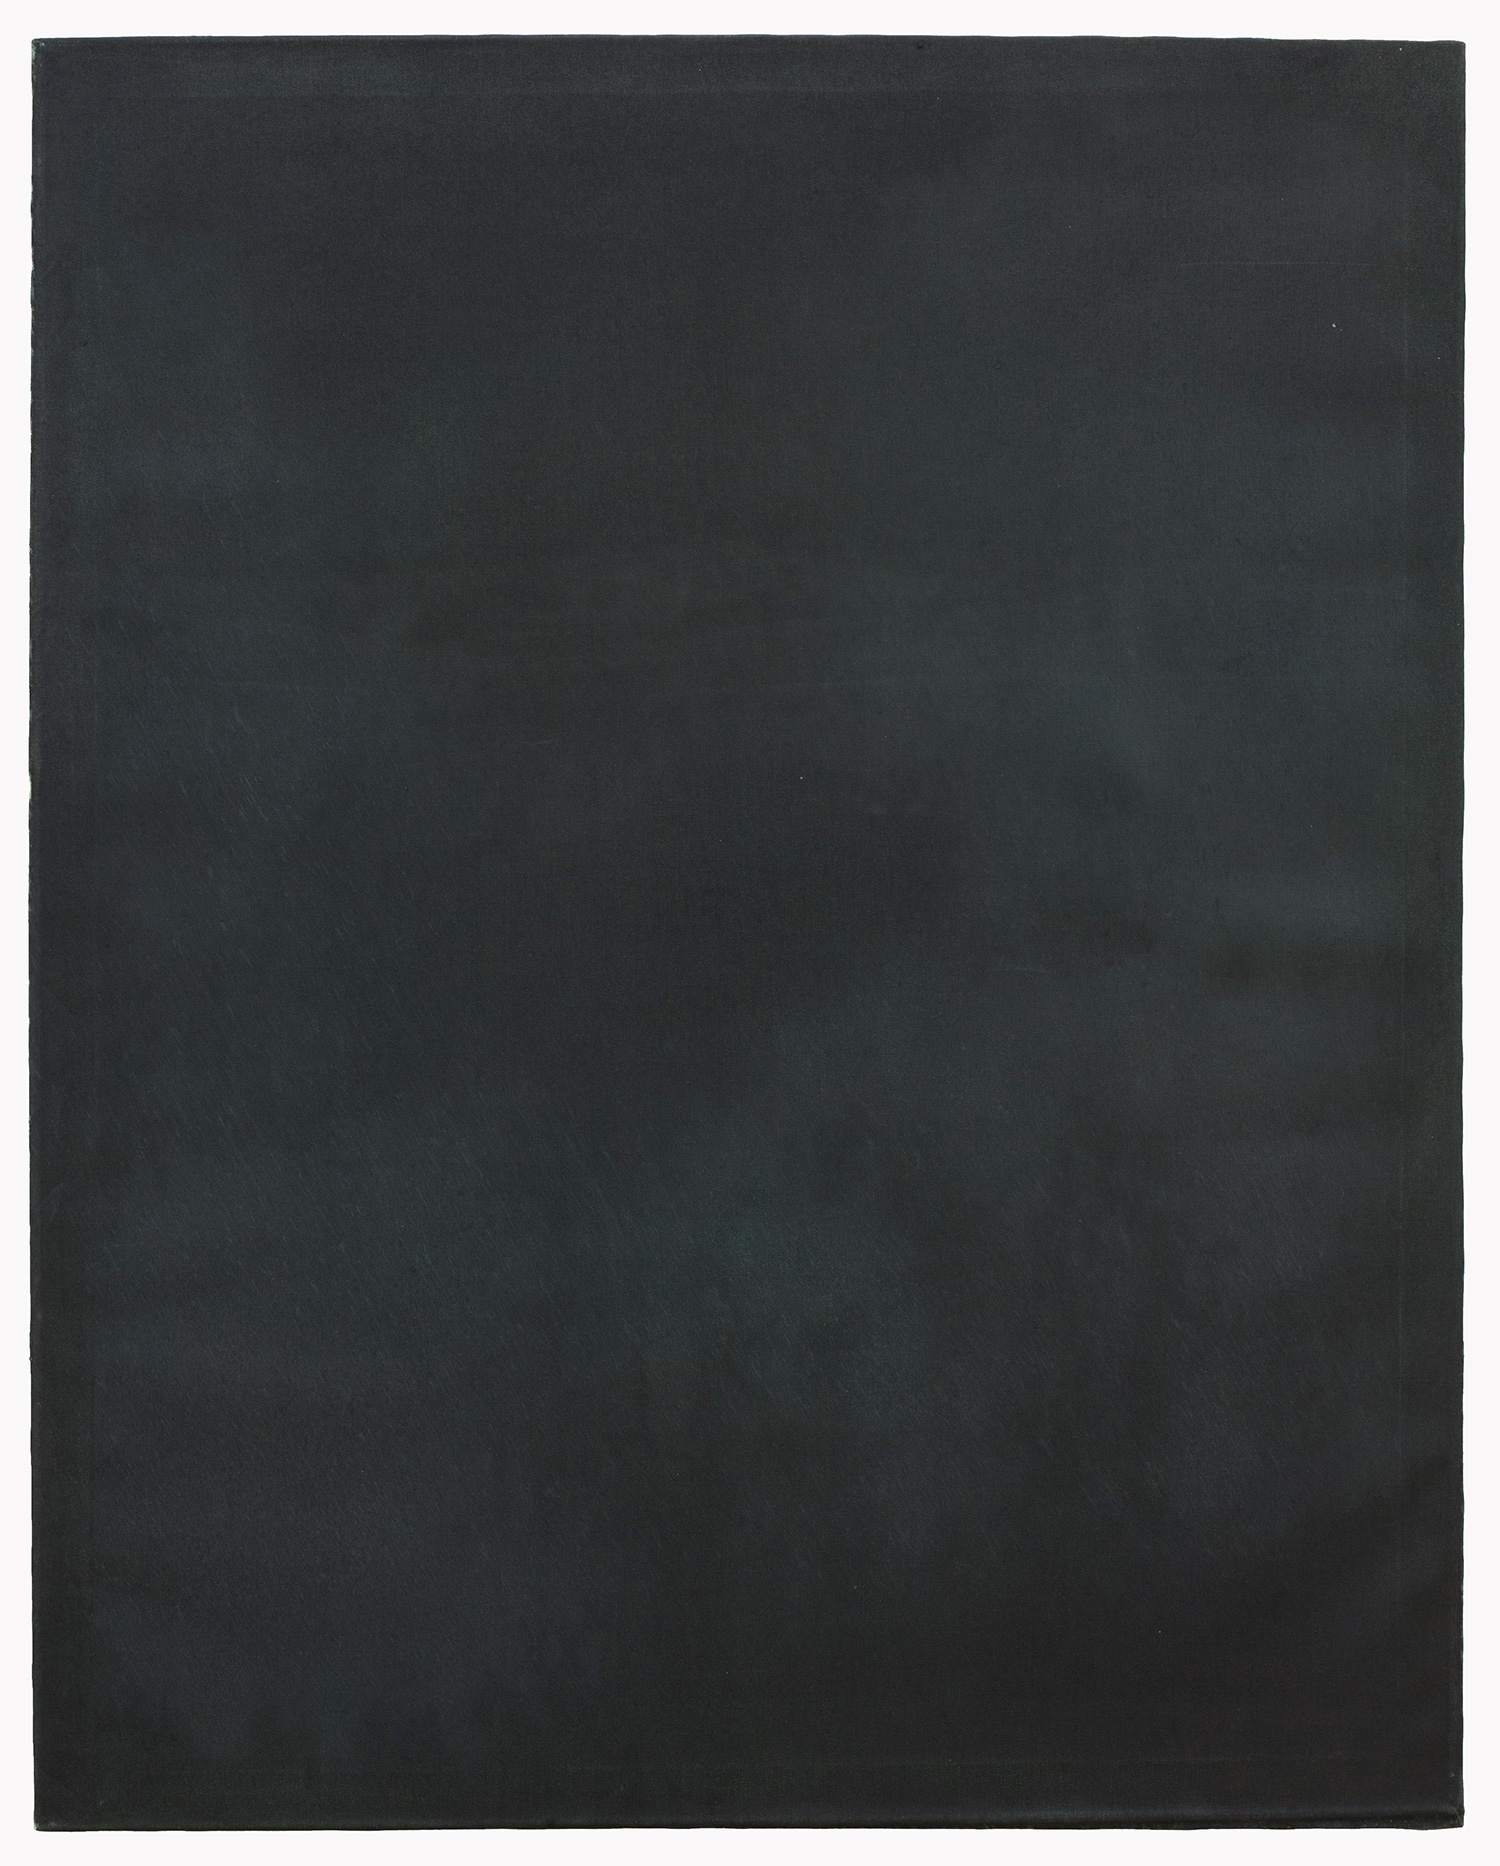  waterhome screen, 2012. 125 x 100 cm. oil on canvas 